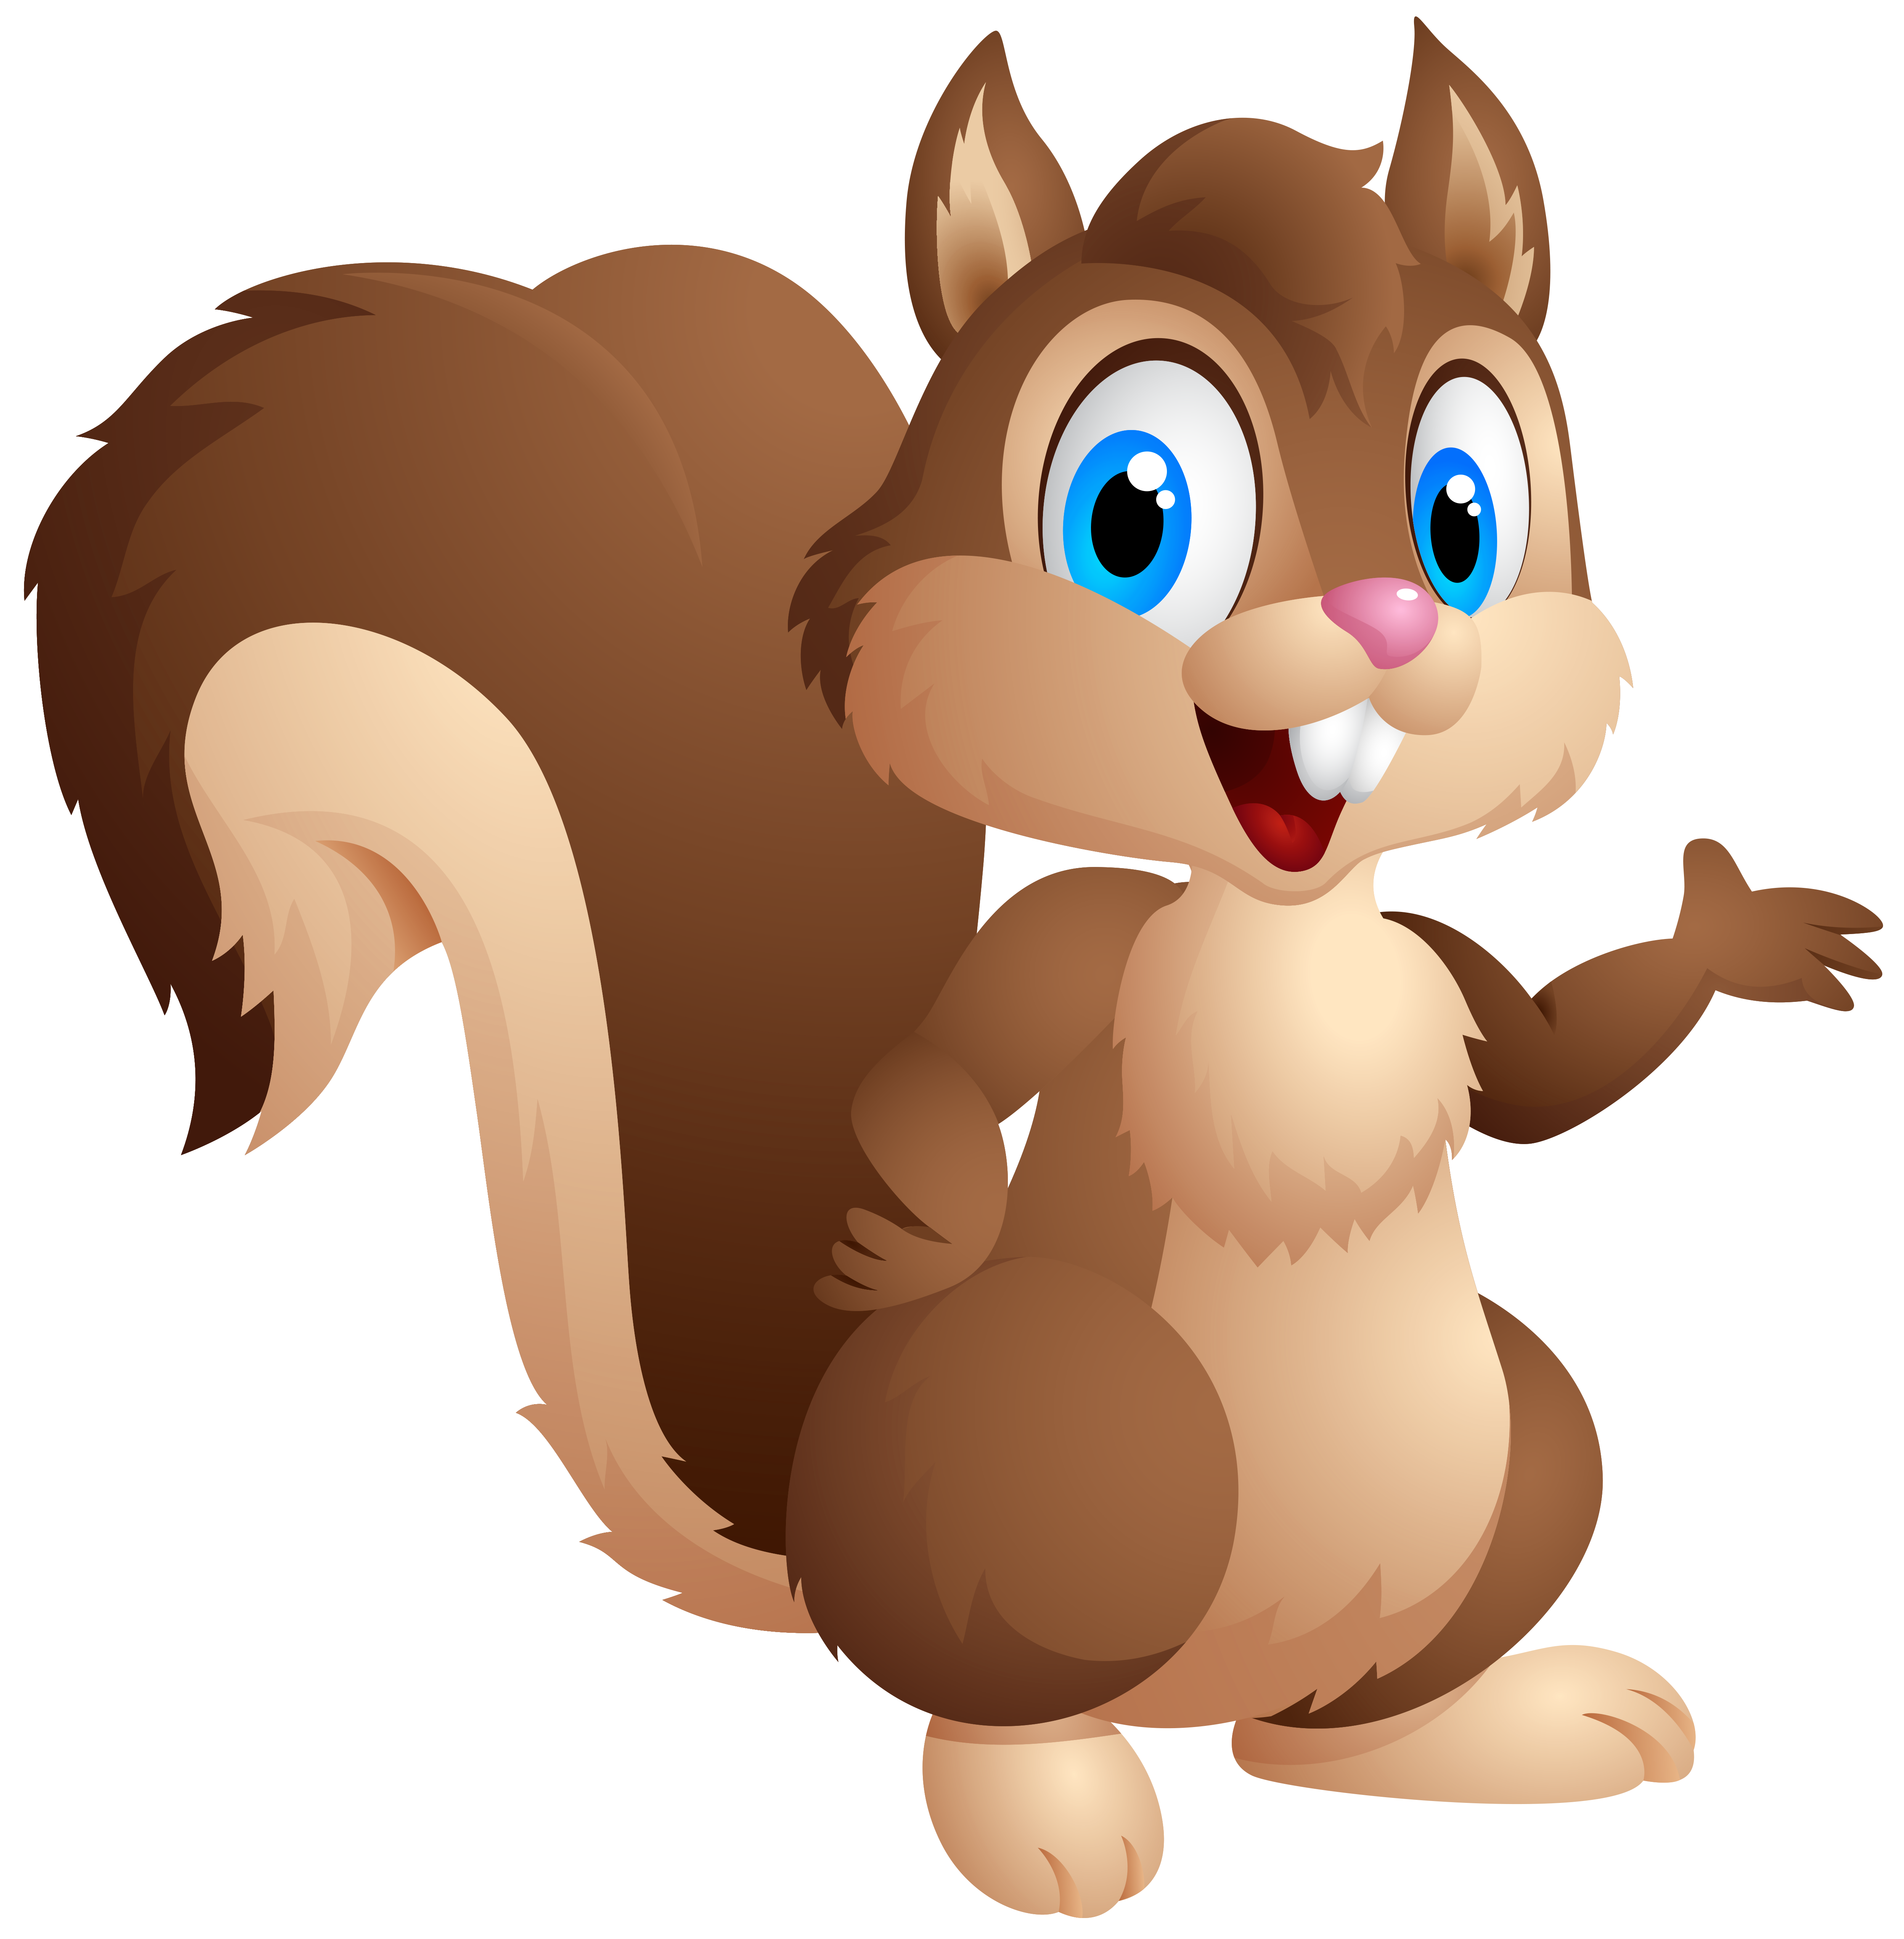 Cute Squirrel Cartoon PNG Clipart Image 